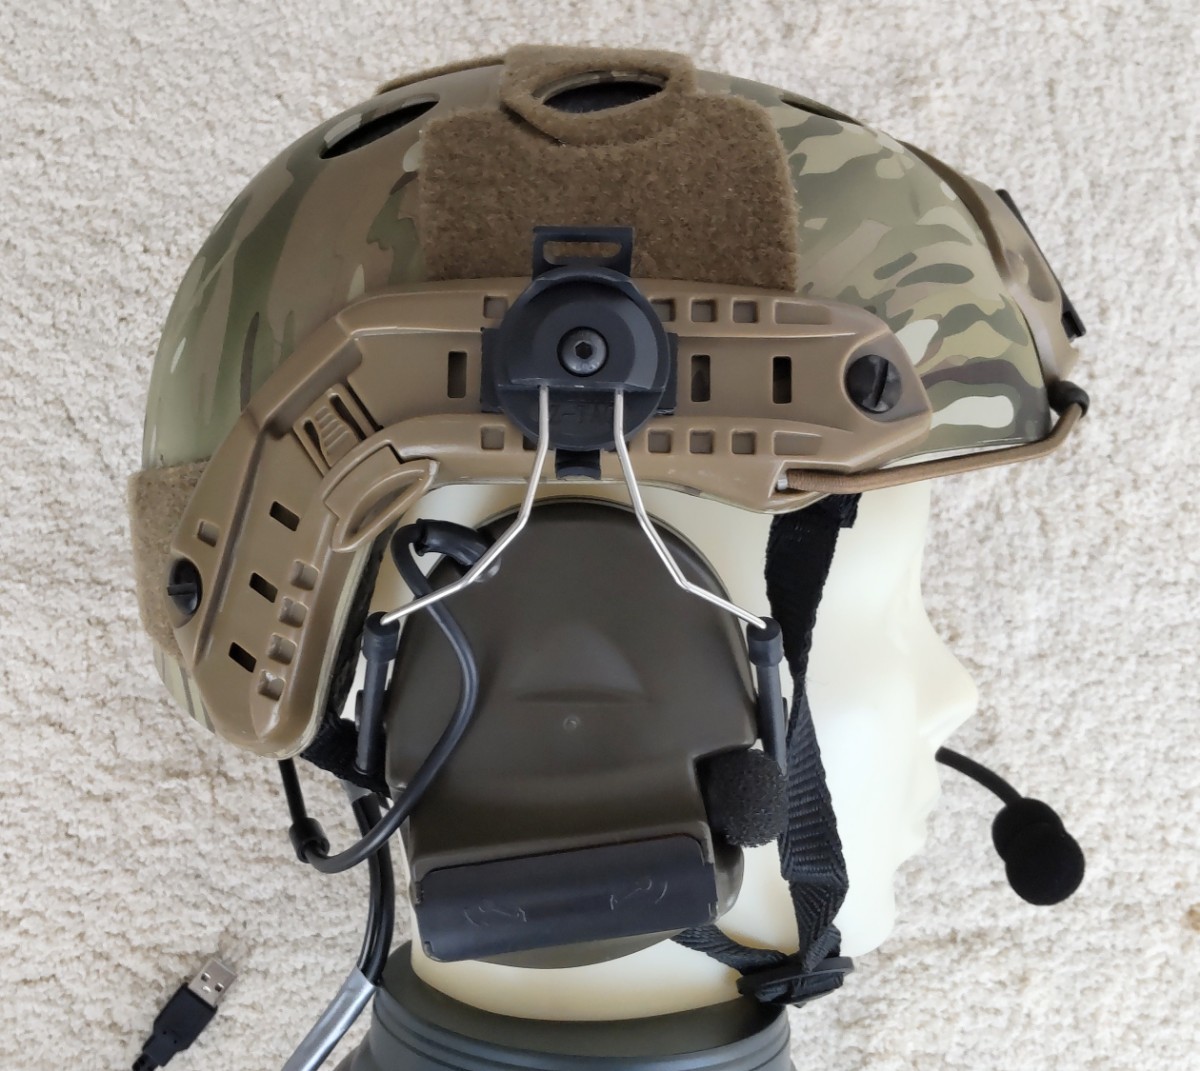 Z-TACTICAL CMTC 2 headset +OPS CORE CARBONE type helmet multi cam ( inside part sending manner fan has processed .)+ARC rail adaptor BK